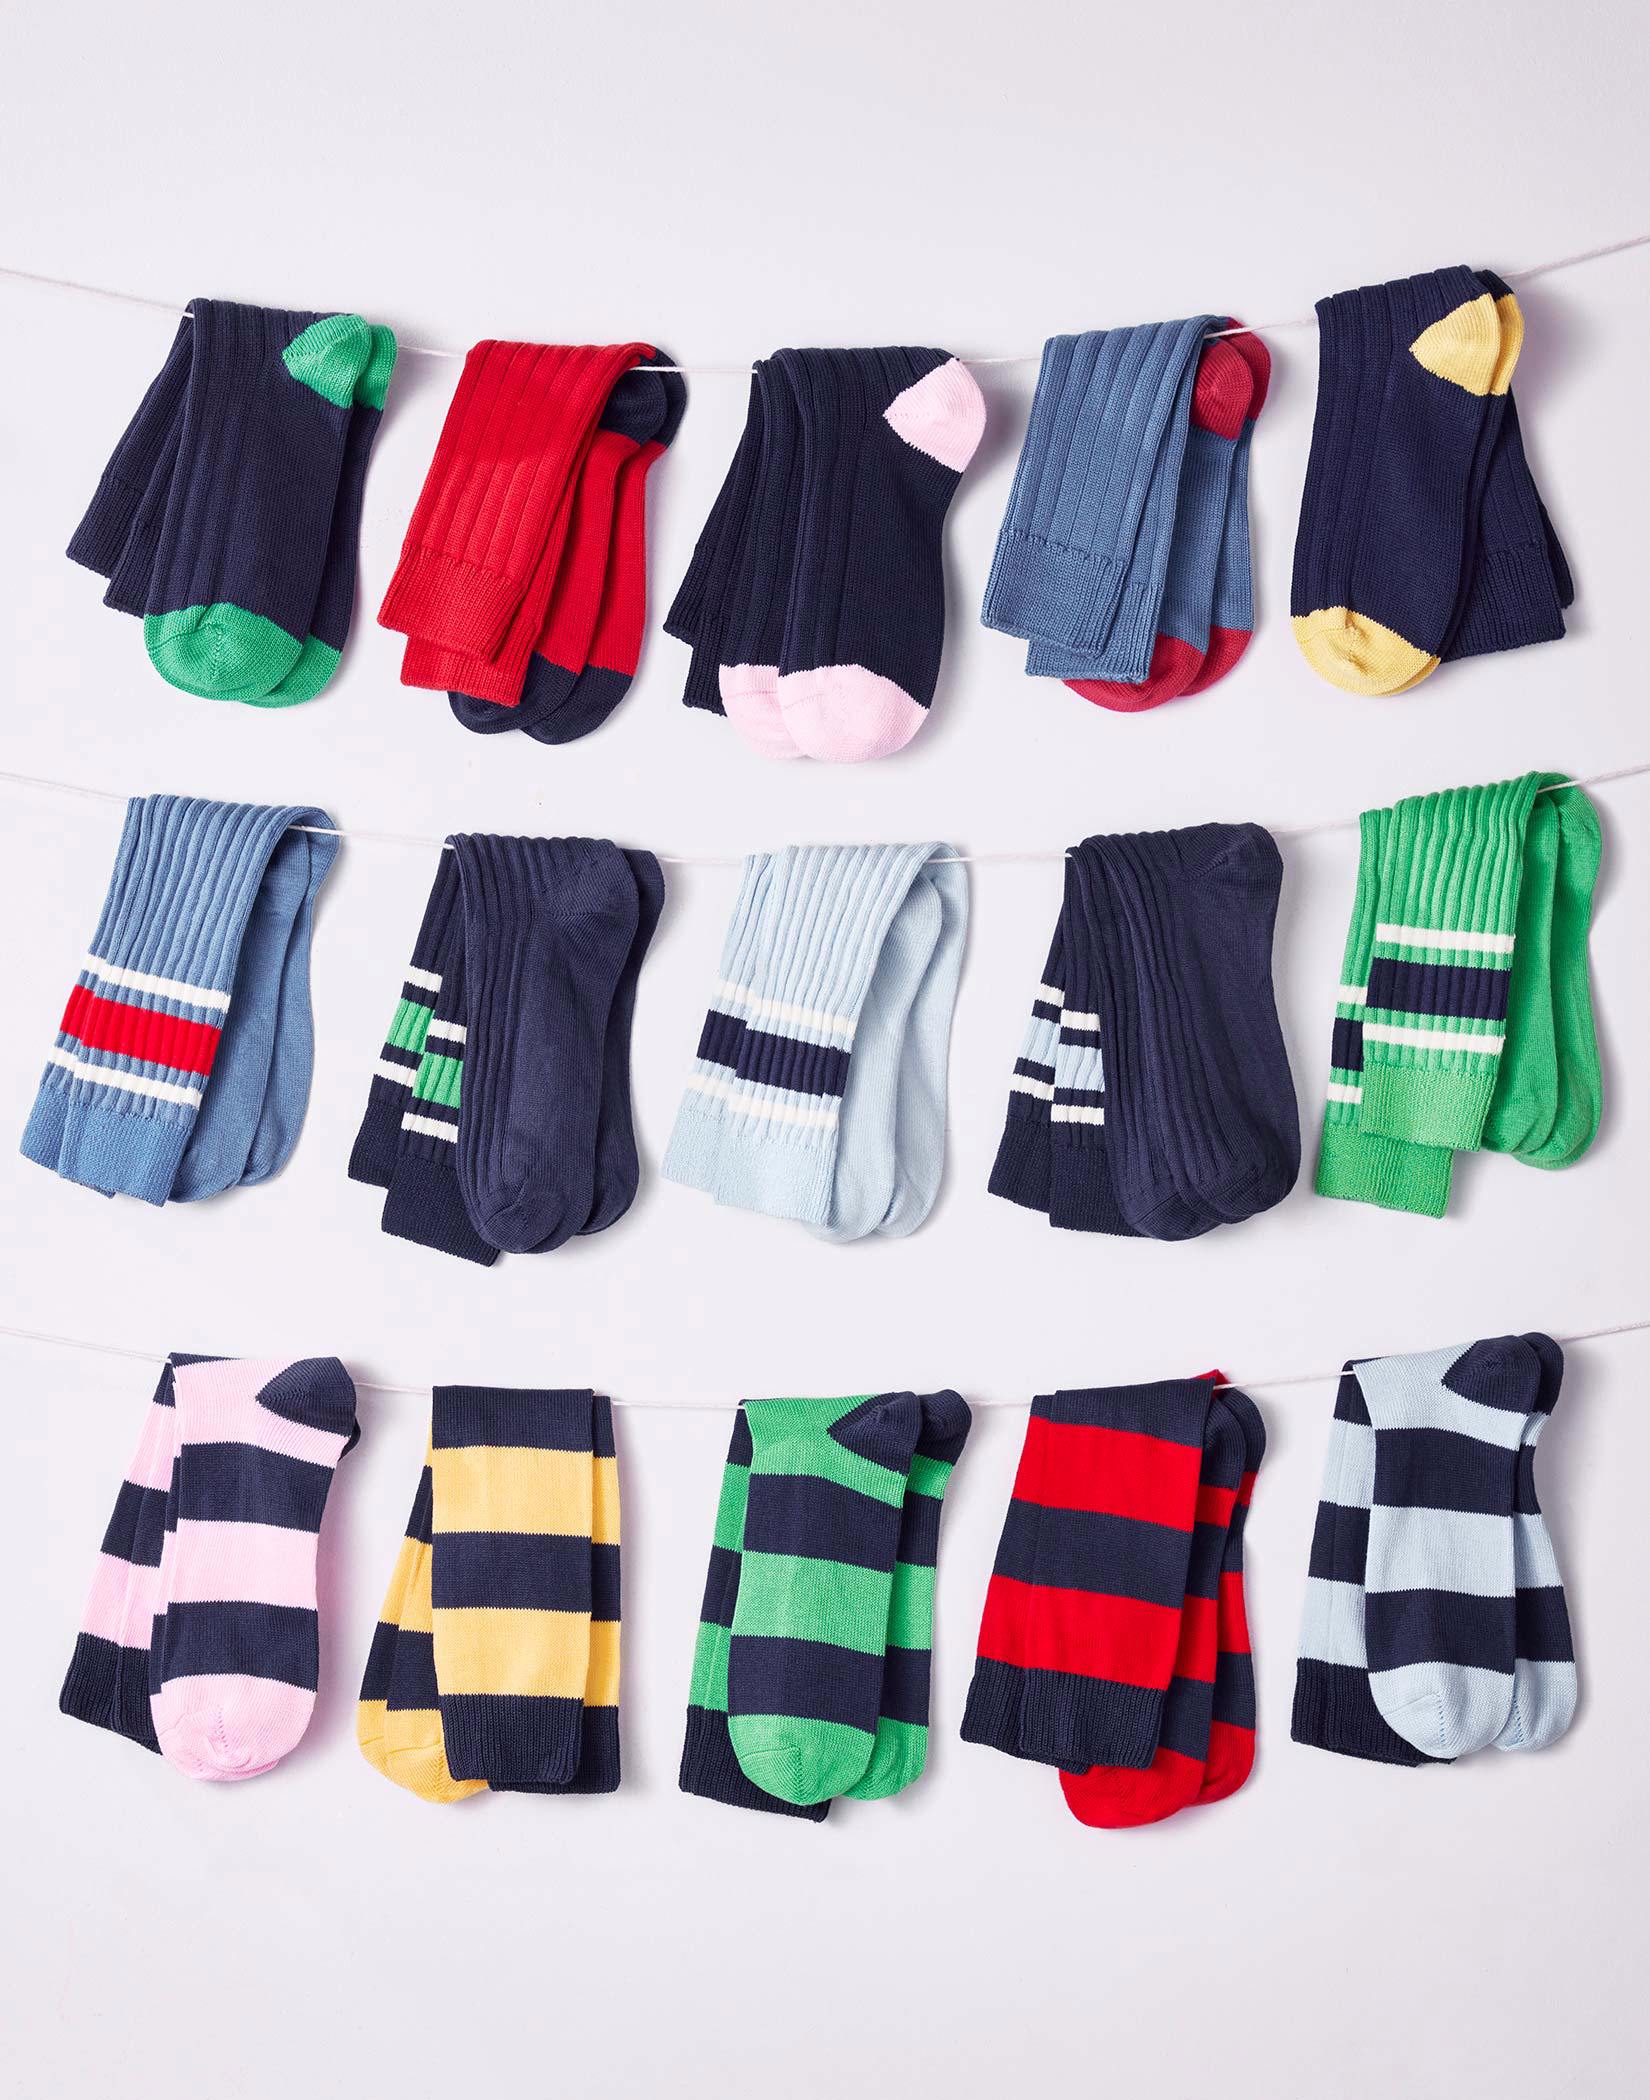 Heel & Toe Cotton Socks - Navy/Green